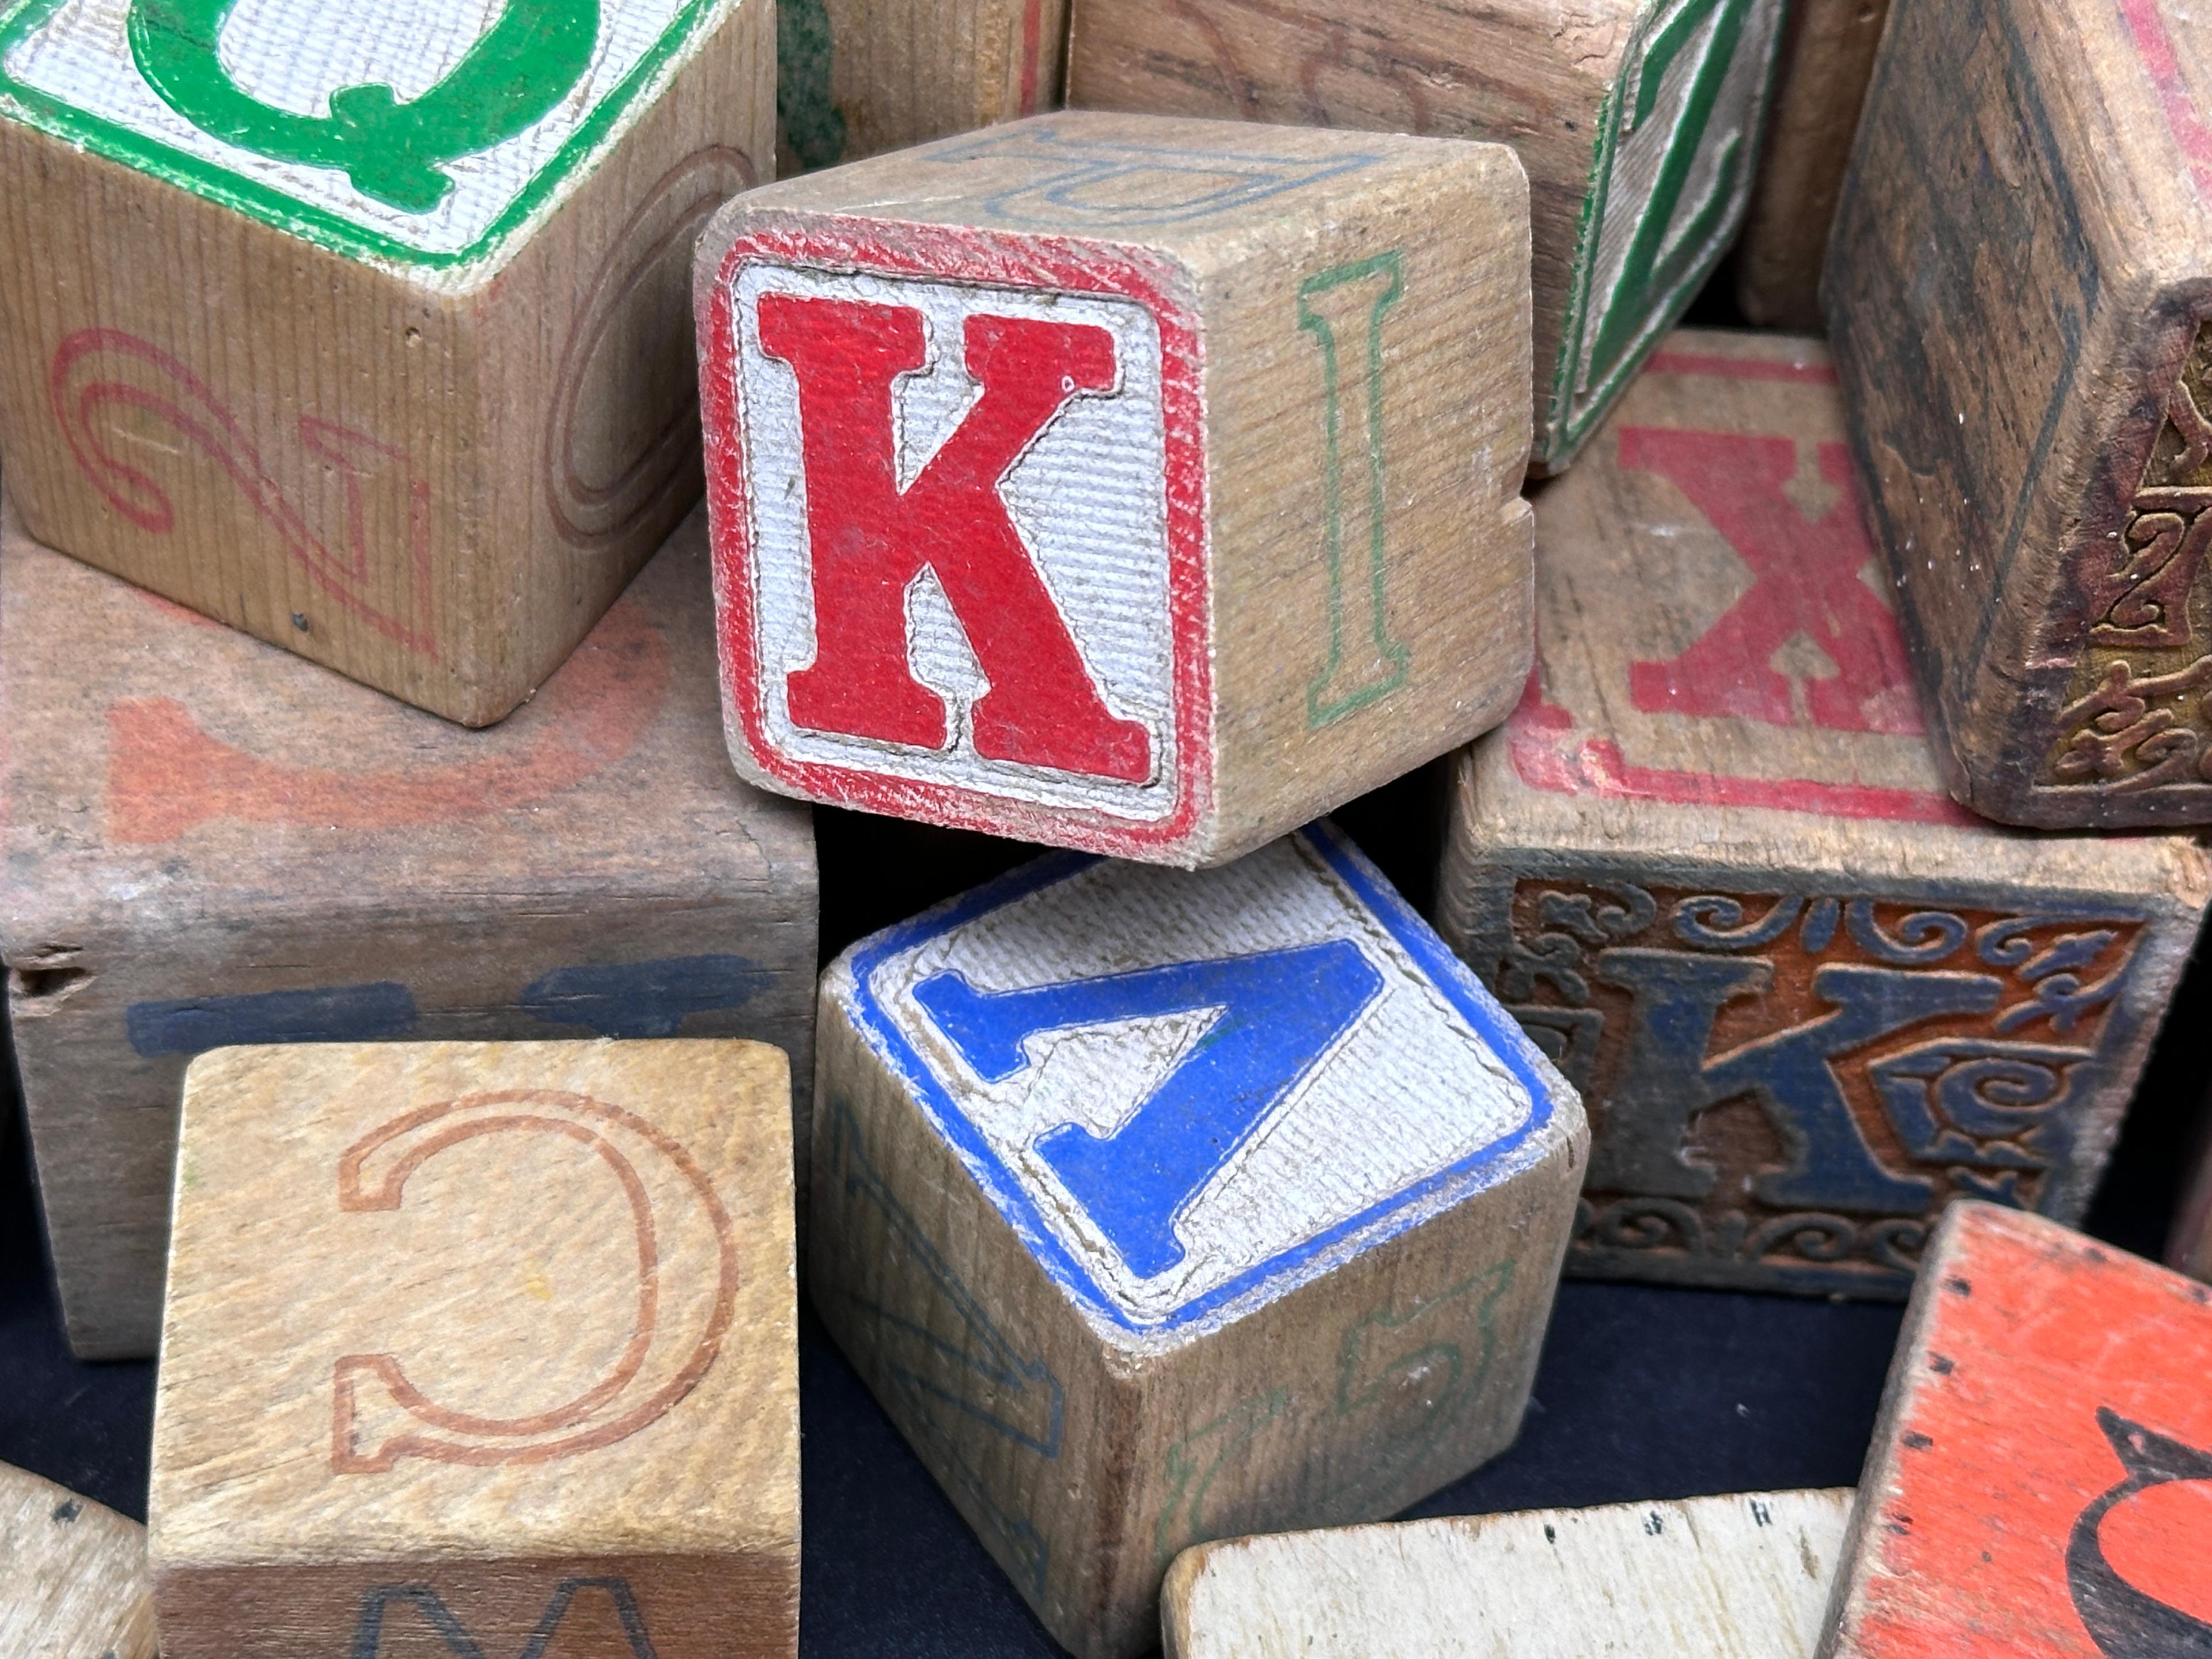 Wooden Alphabet Blocks